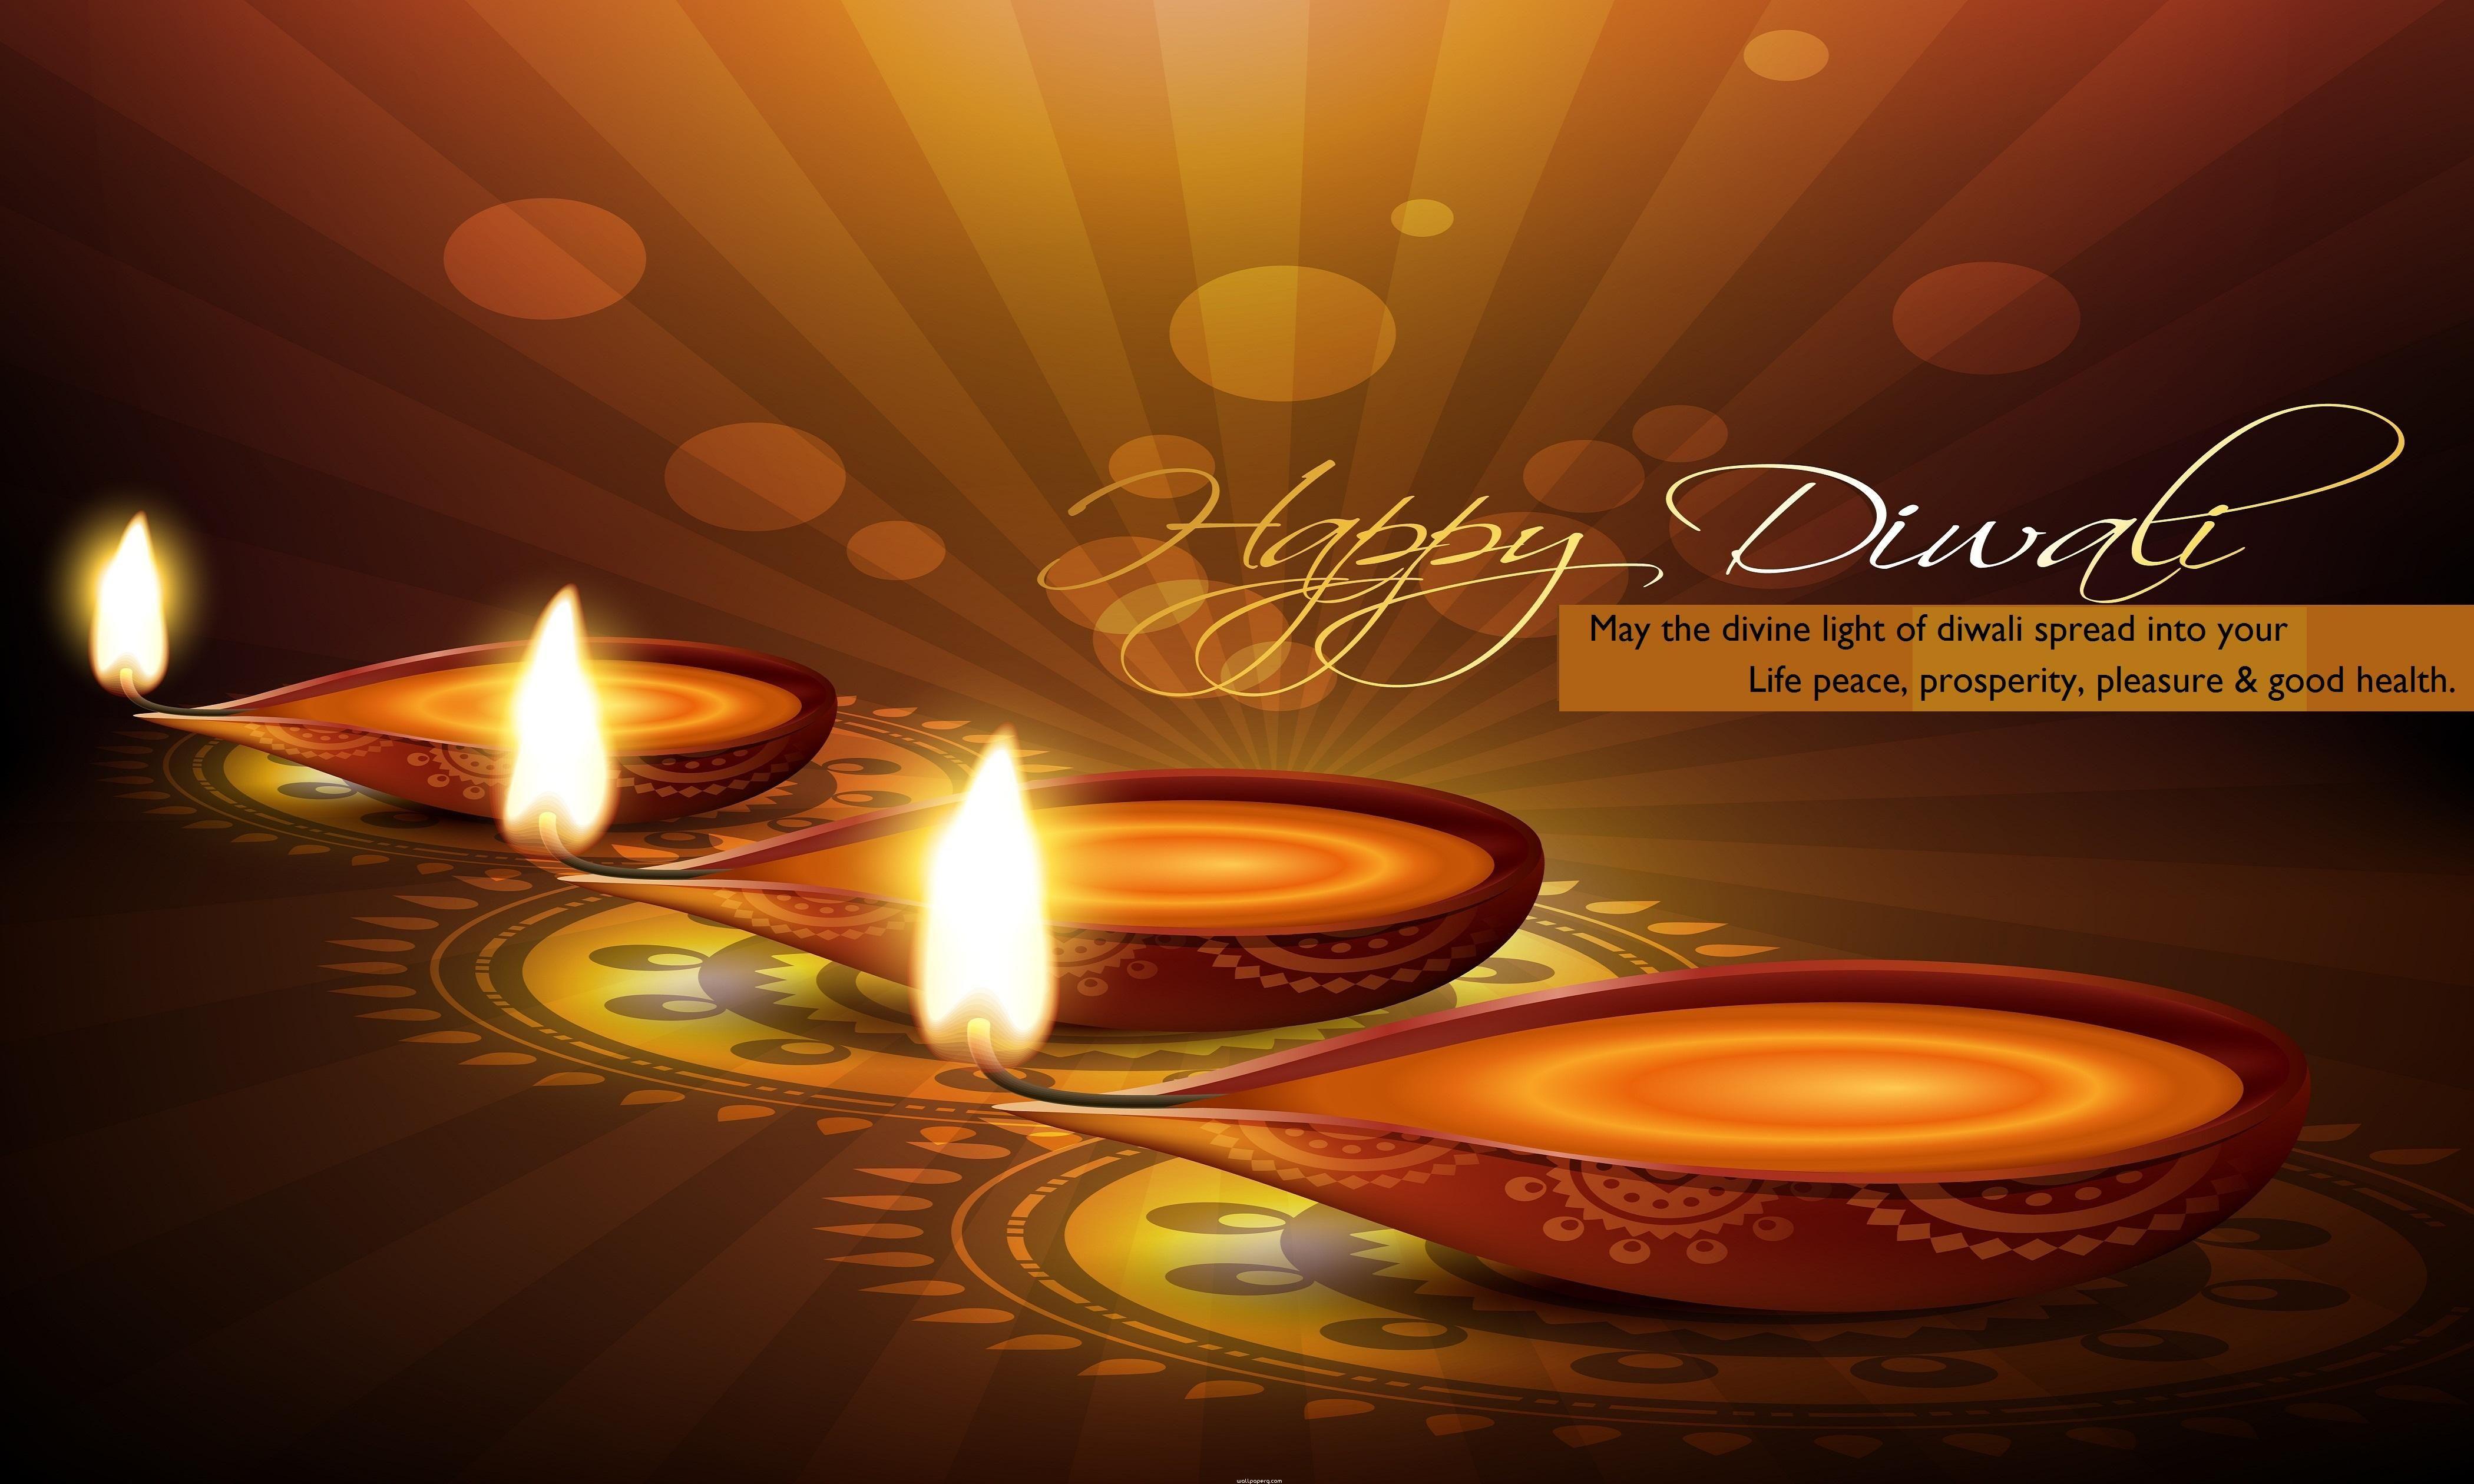 Download HD wallpaper of Diwali wishes wallpaper